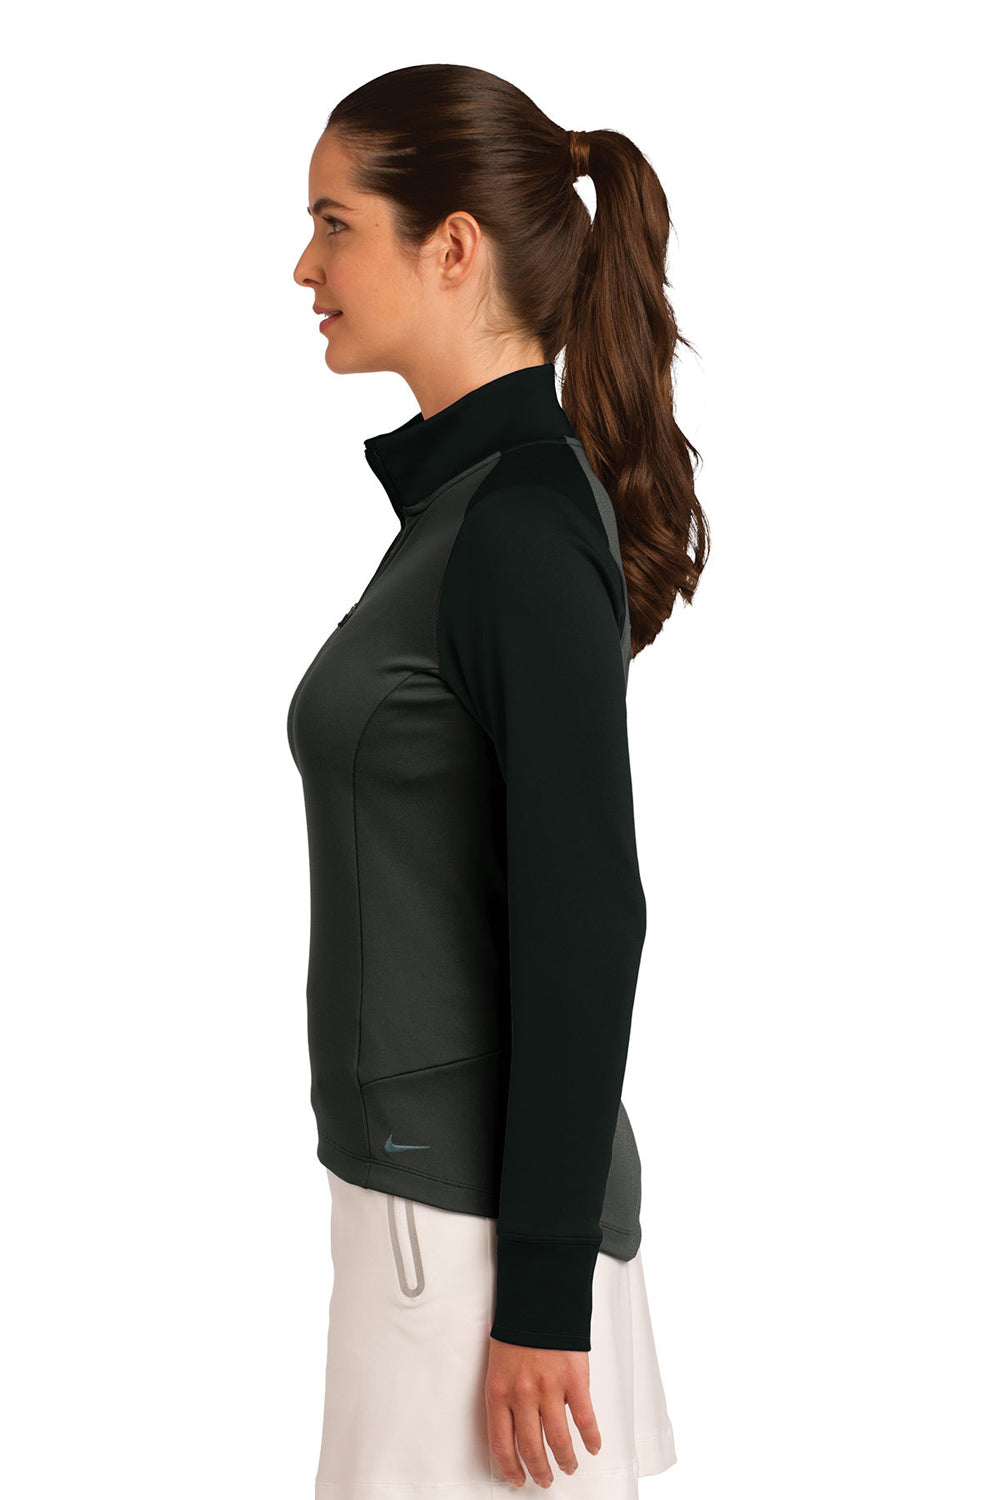 Nike 578674 Womens Dri-Fit Moisture Wicking 1/4 Zip Sweatshirt Anthracite Grey/Black Model Side